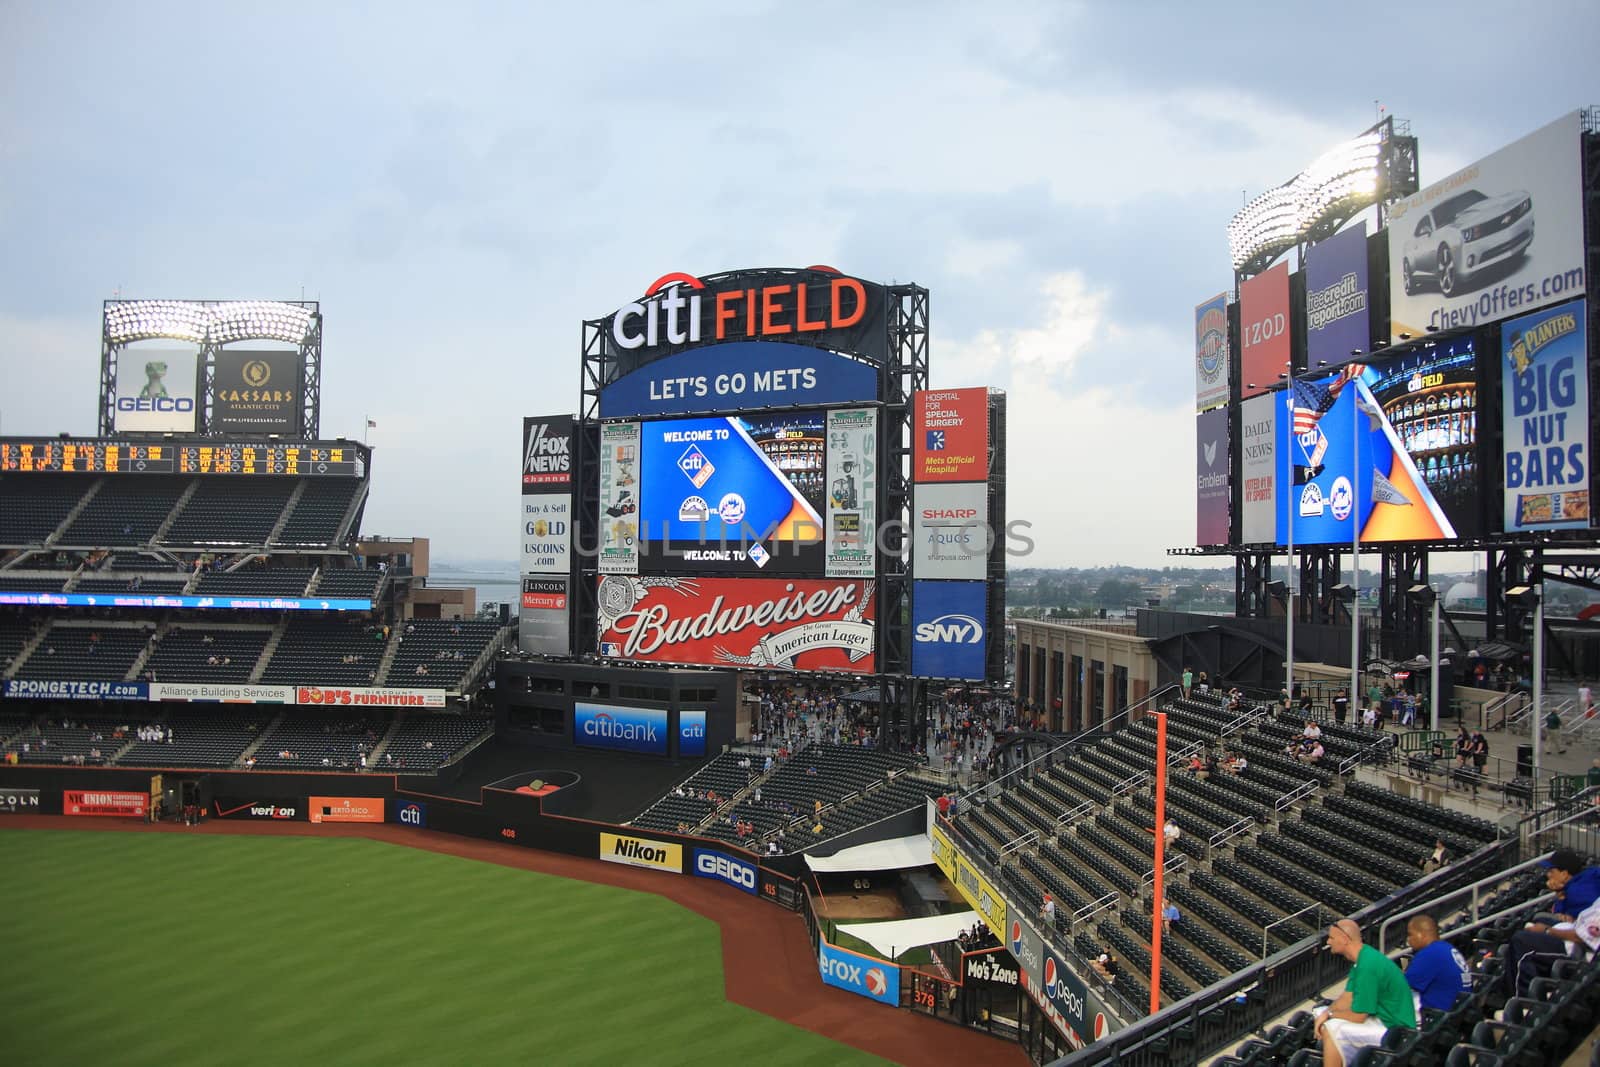 Brand new Citi Field features a jumbo scoreboard and right field Pepsi Porch